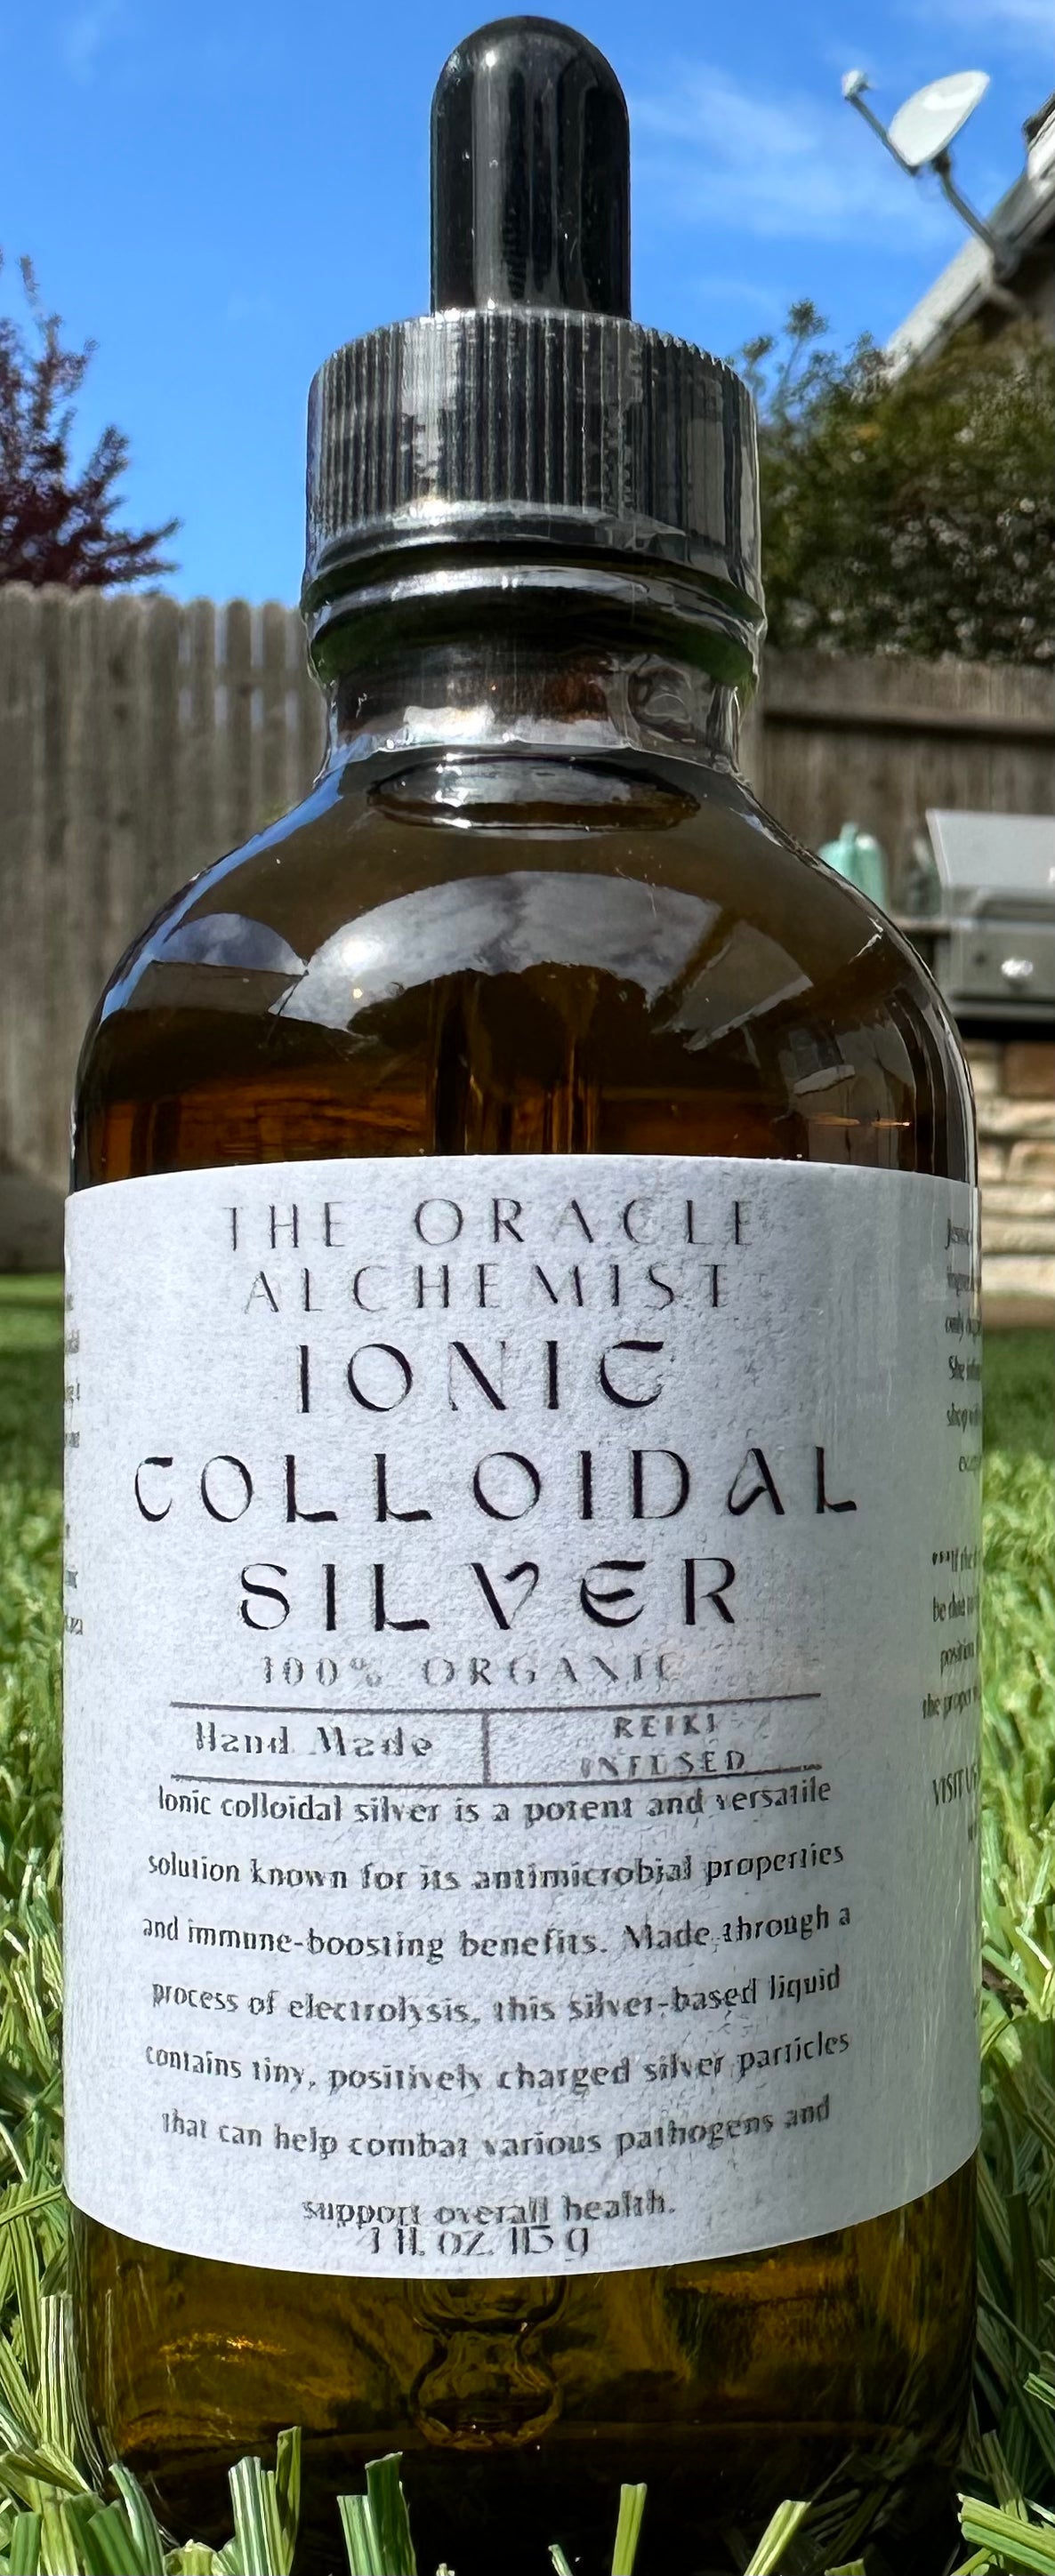 Ionic Colloidal Silver - The Oracle Alchemist